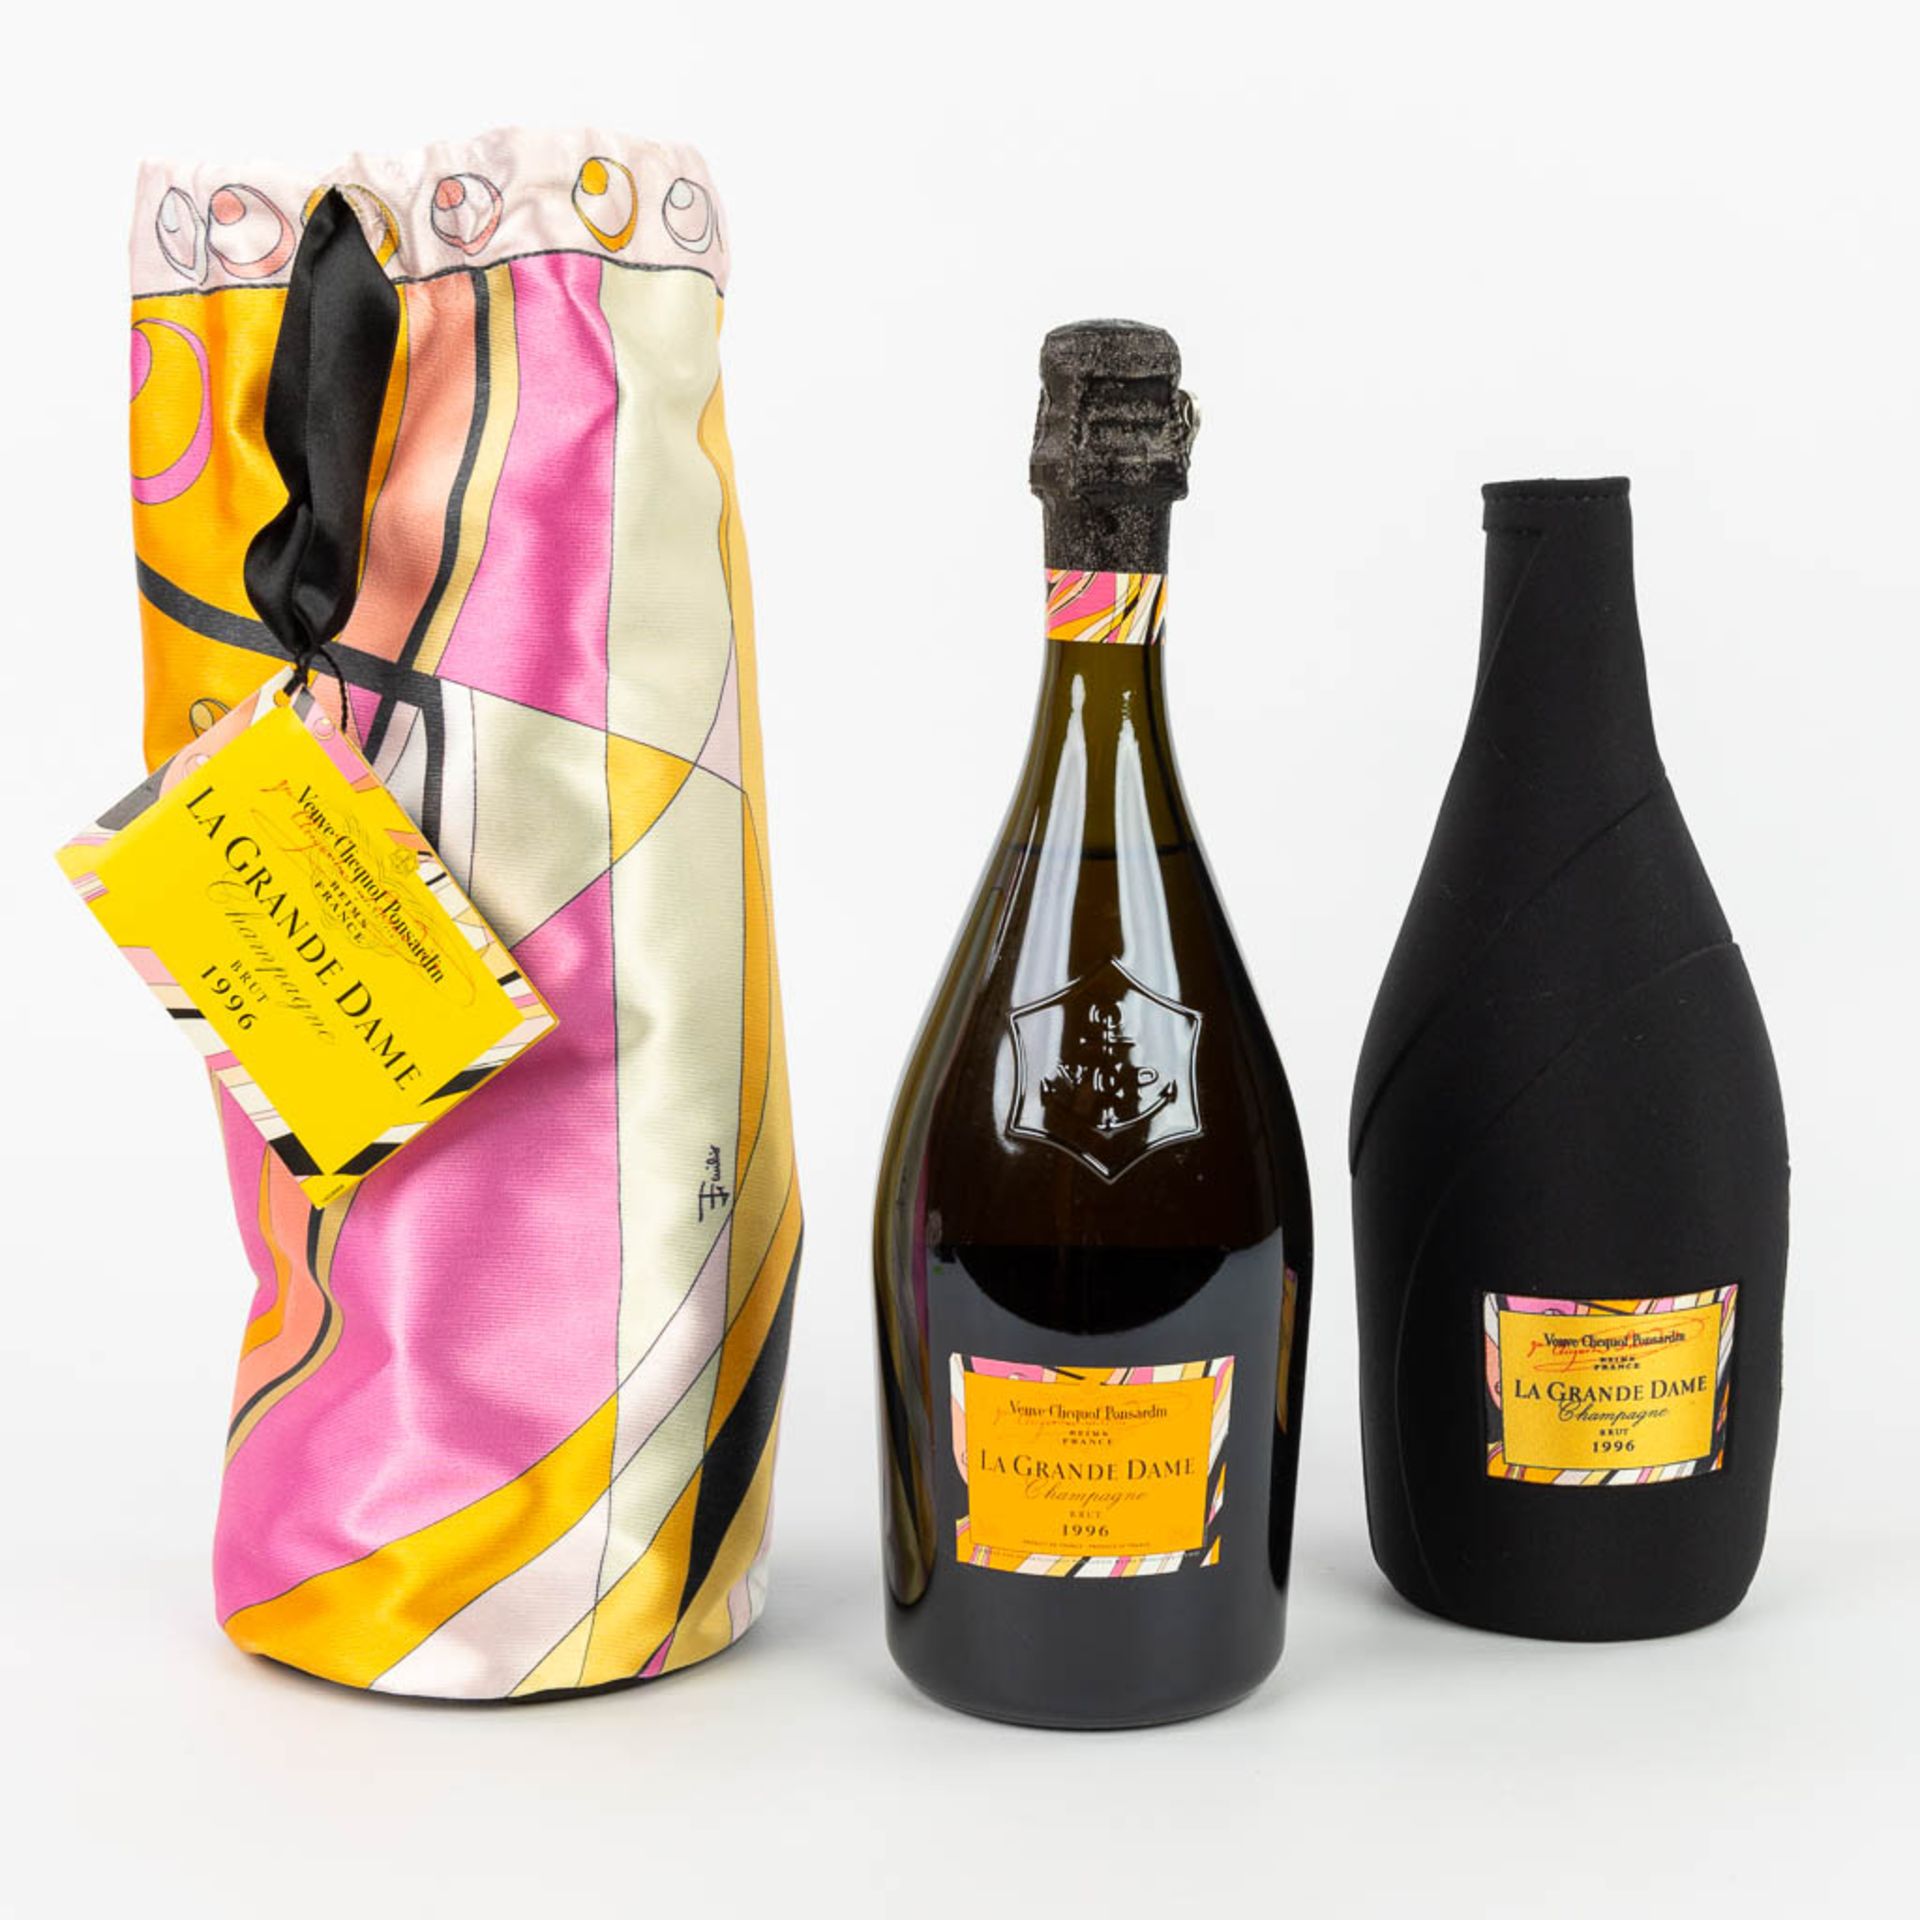 A bottle of Veuve Clicquot Ponsardin 1996 'La Grande Dame' limited edition by Emilio Pucci.